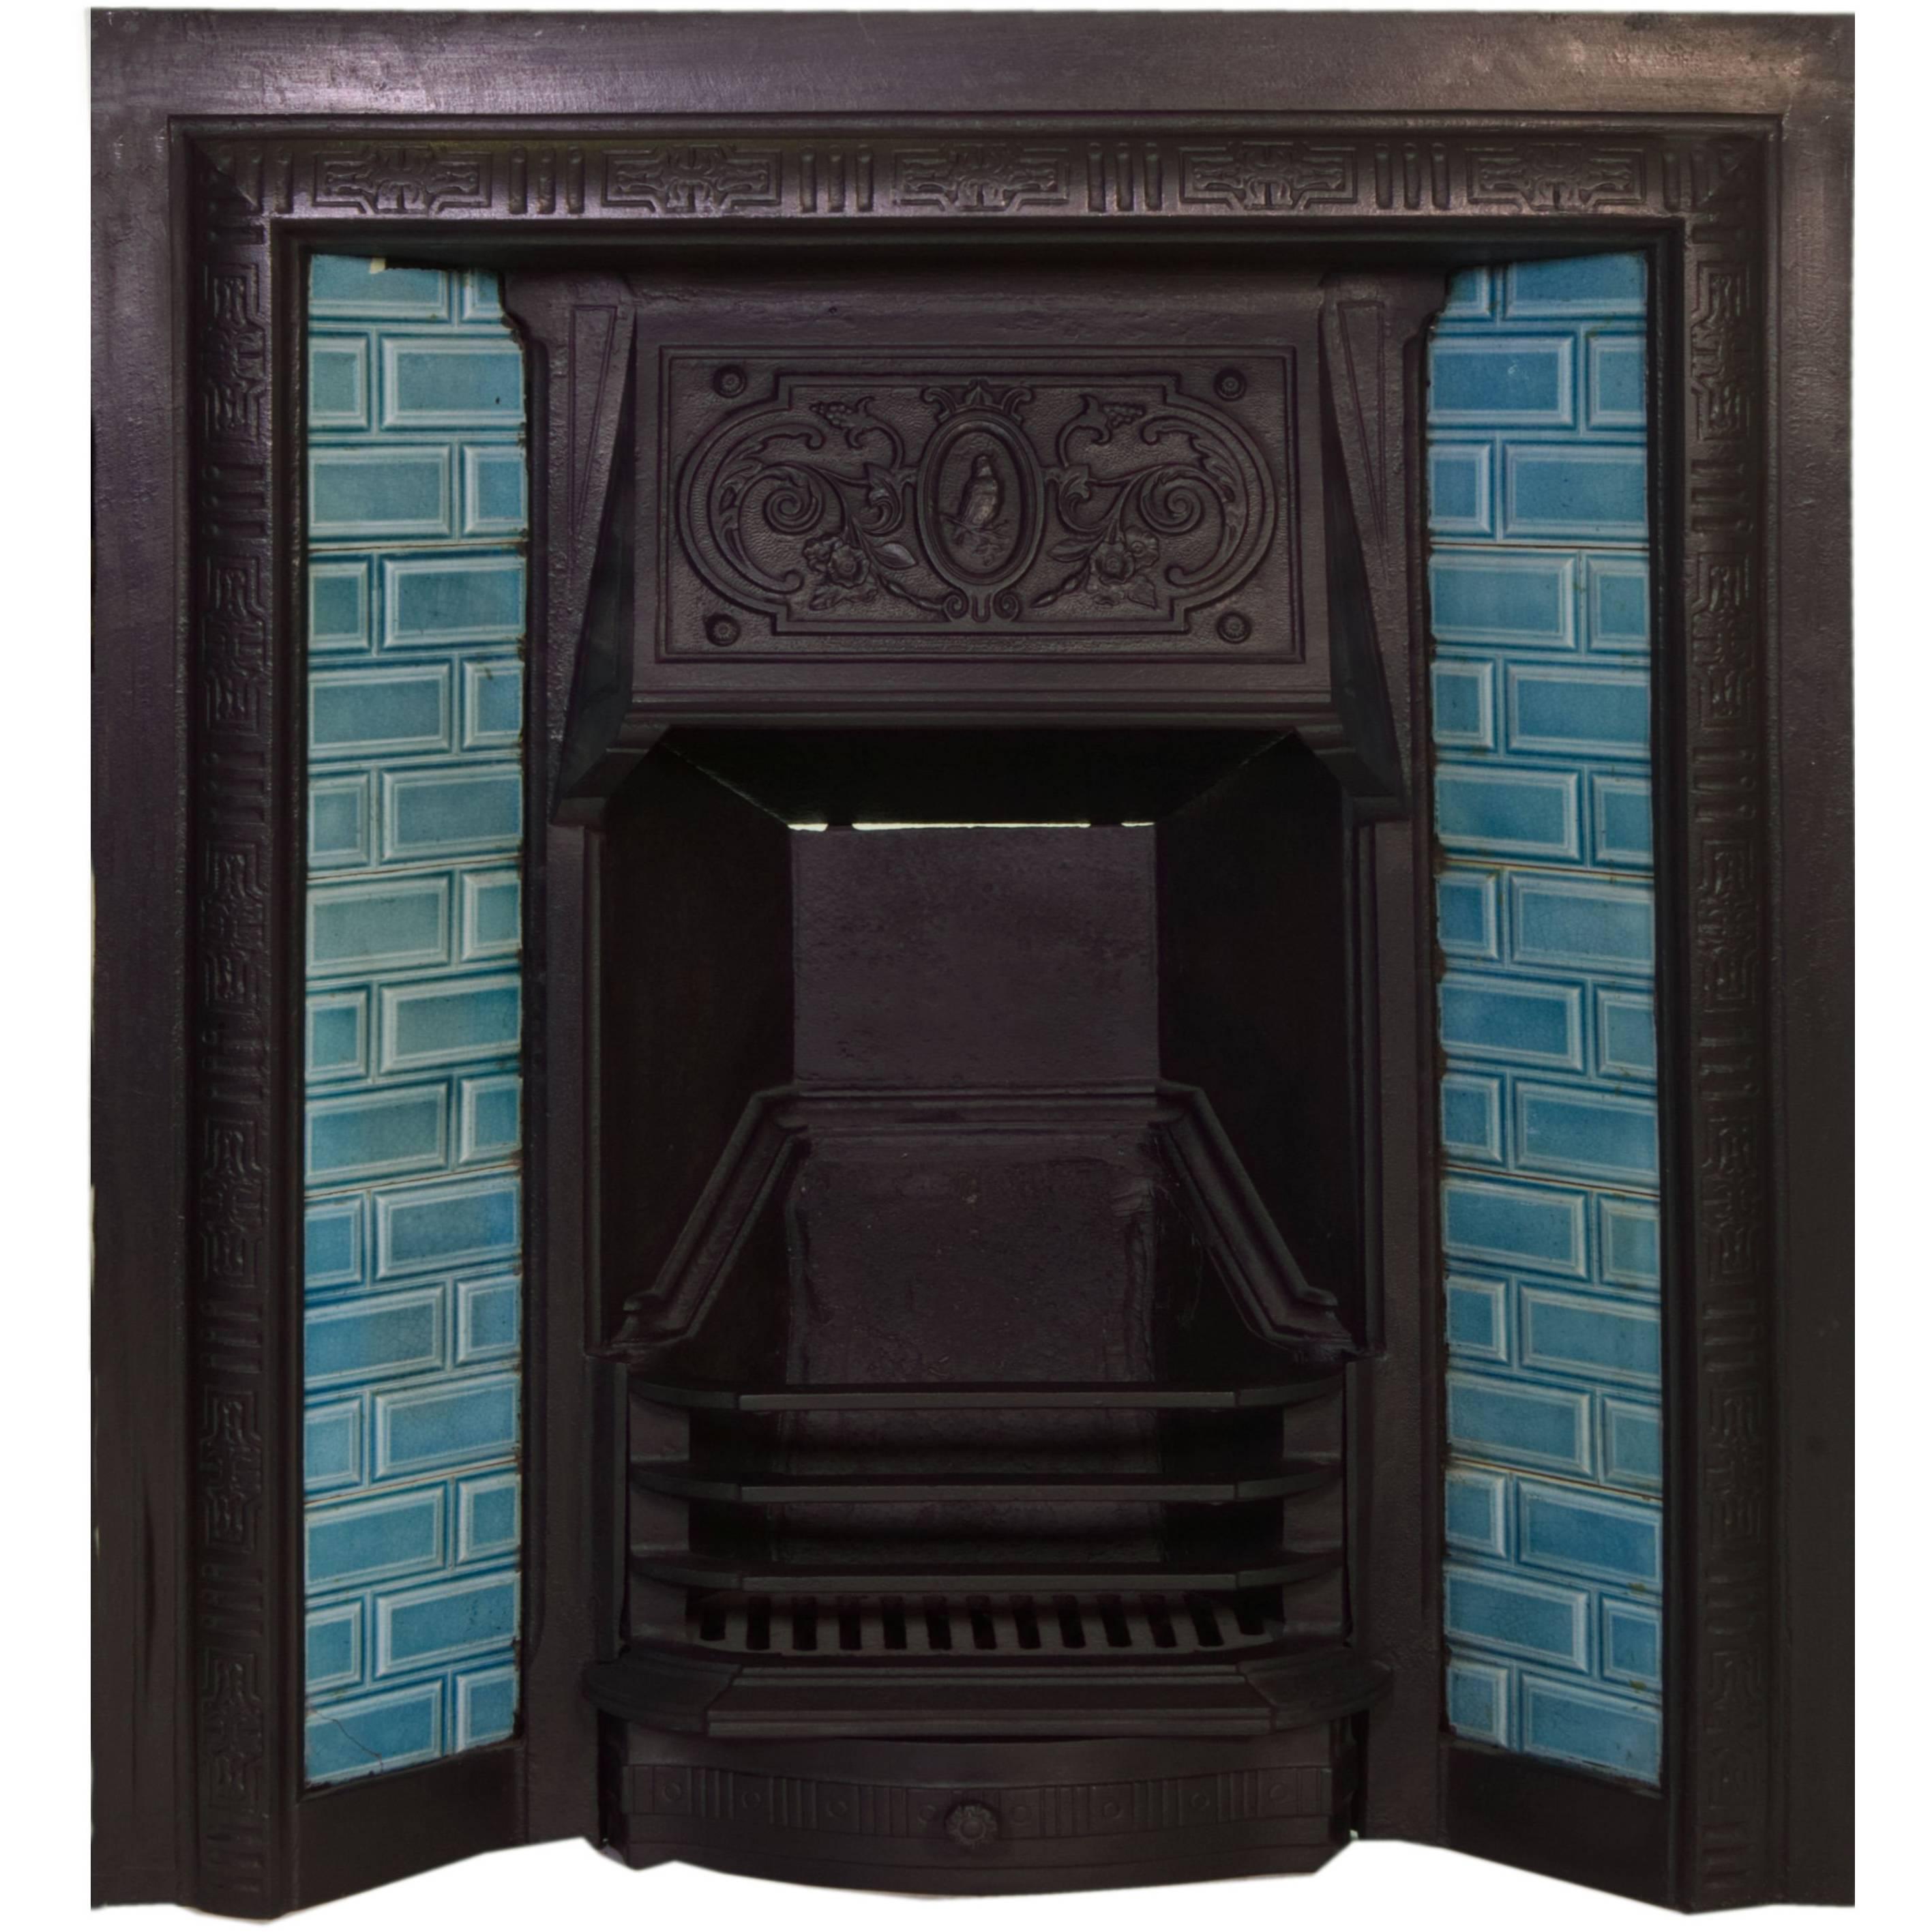 19th Century Victorian Cast-Iron Tiled Fireplace Insert